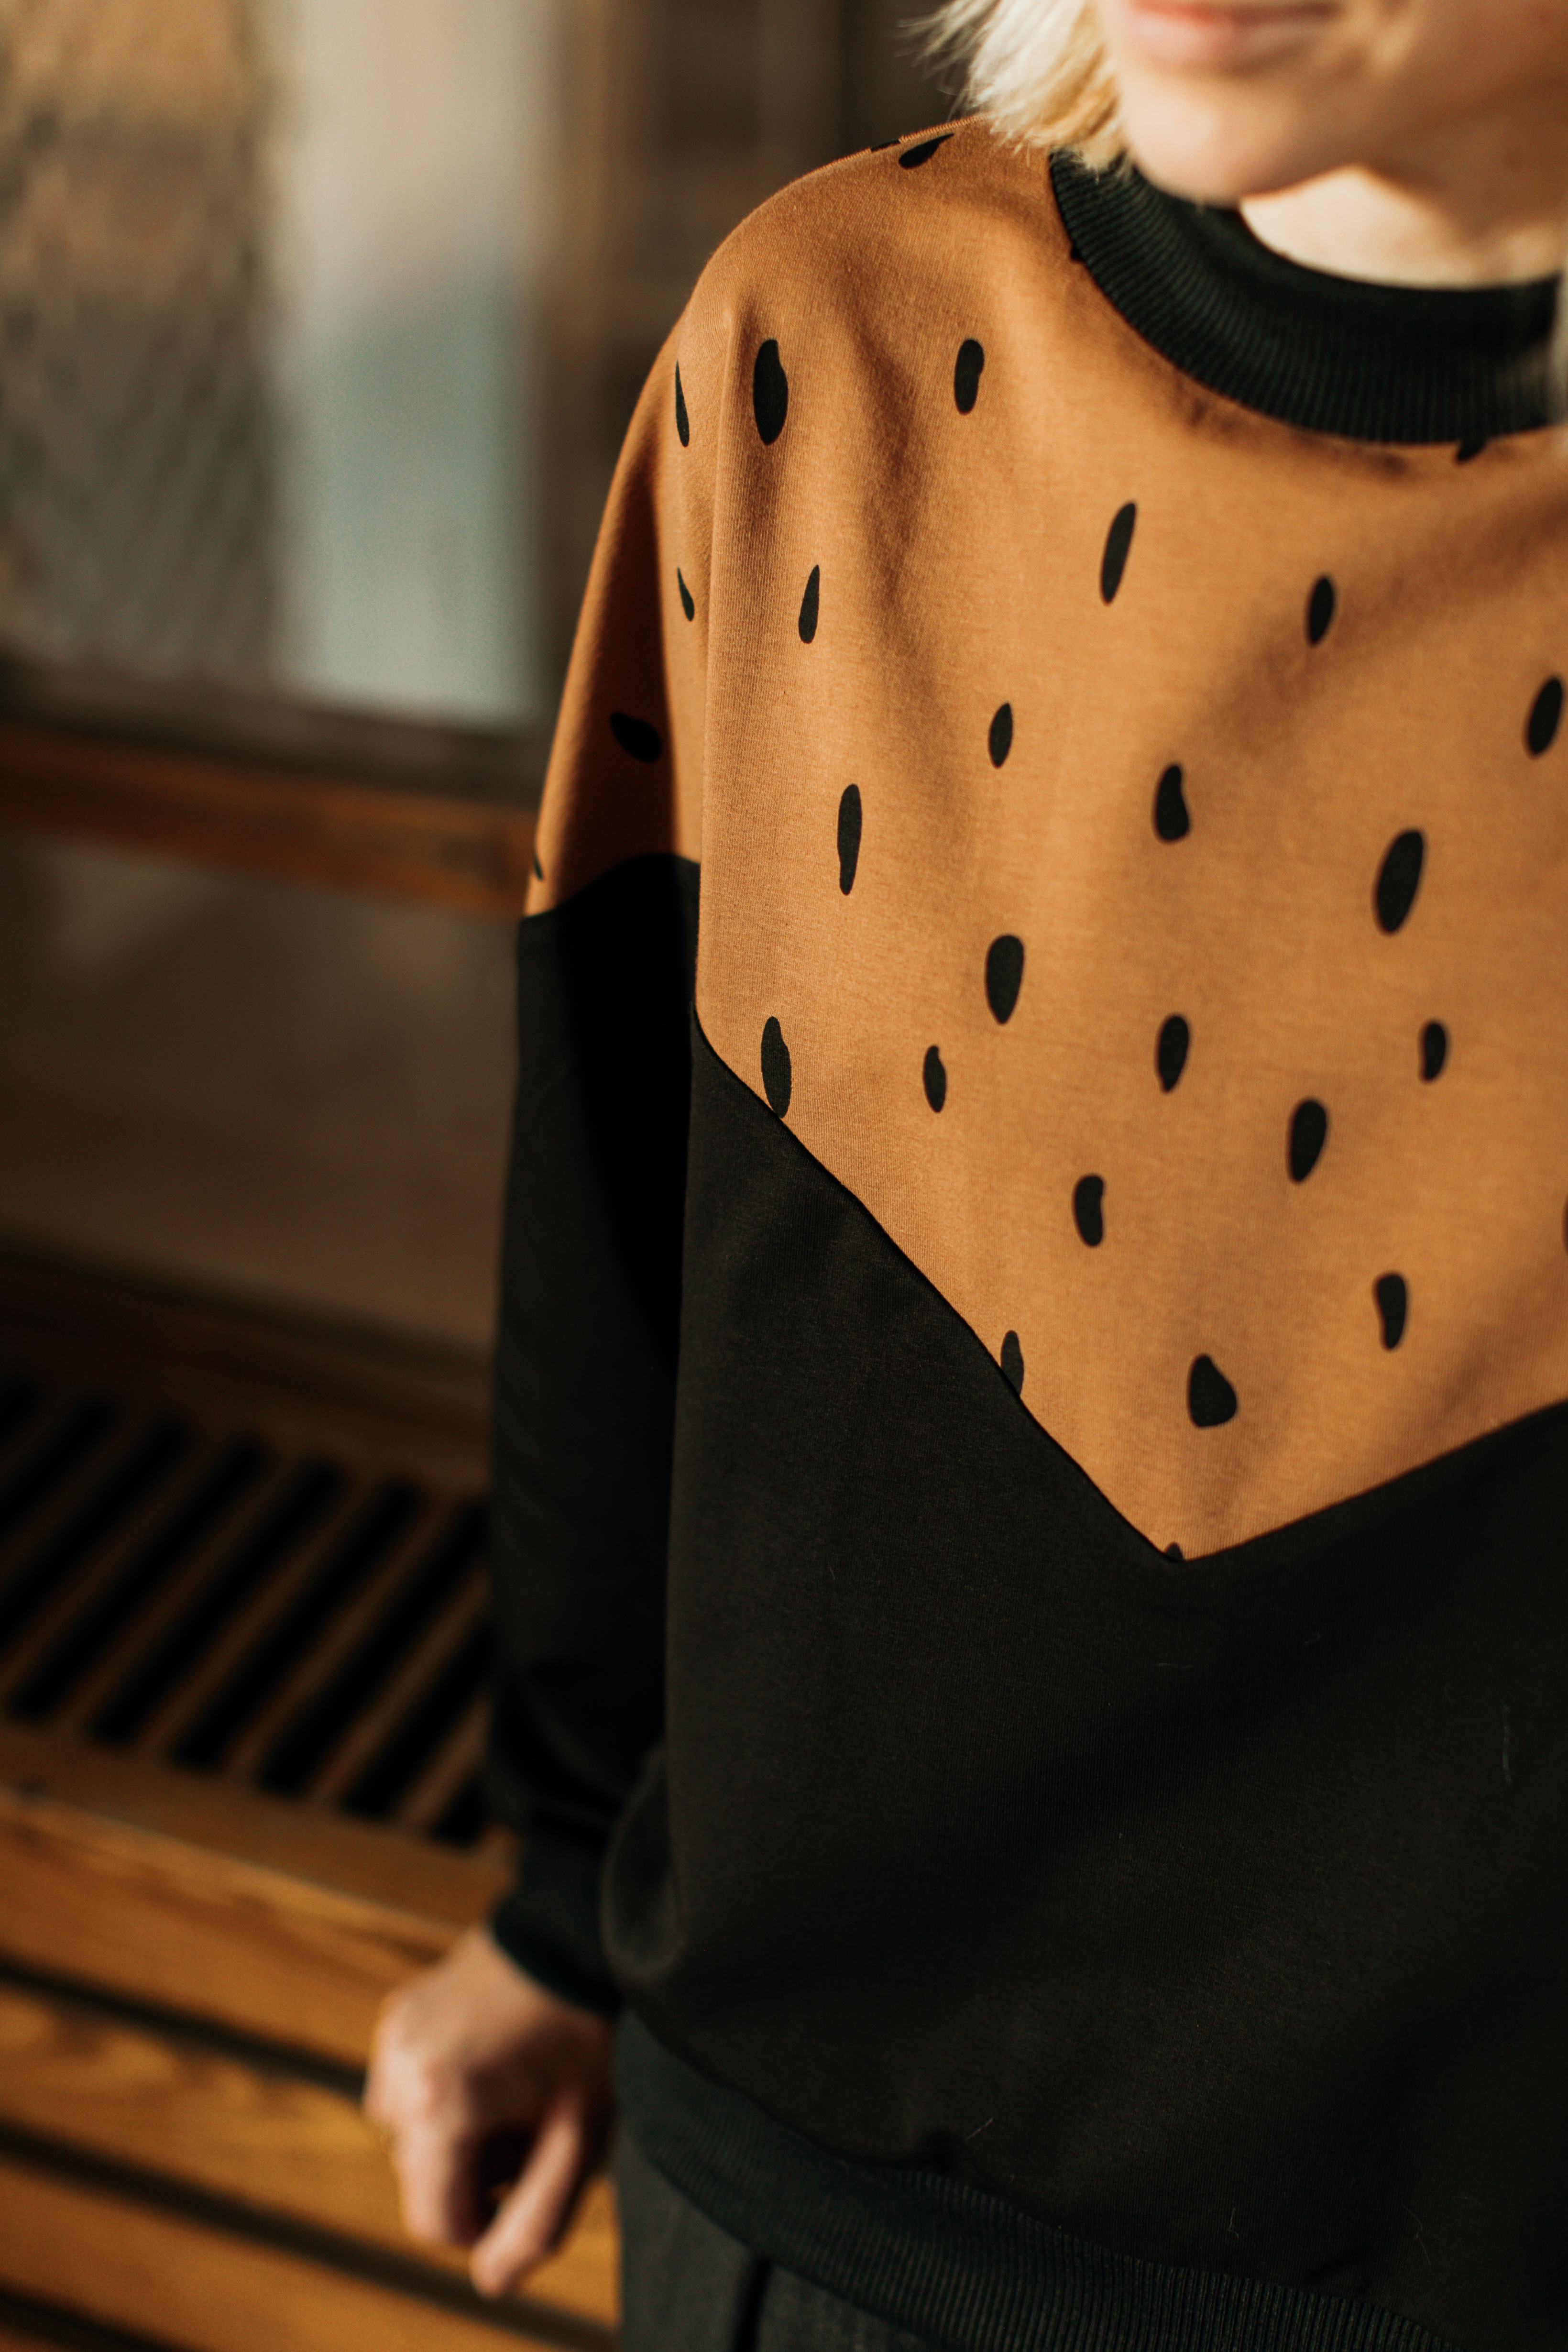 blouse DRUPEL, cotton, comfortable, original jumper, black and brown, handmade